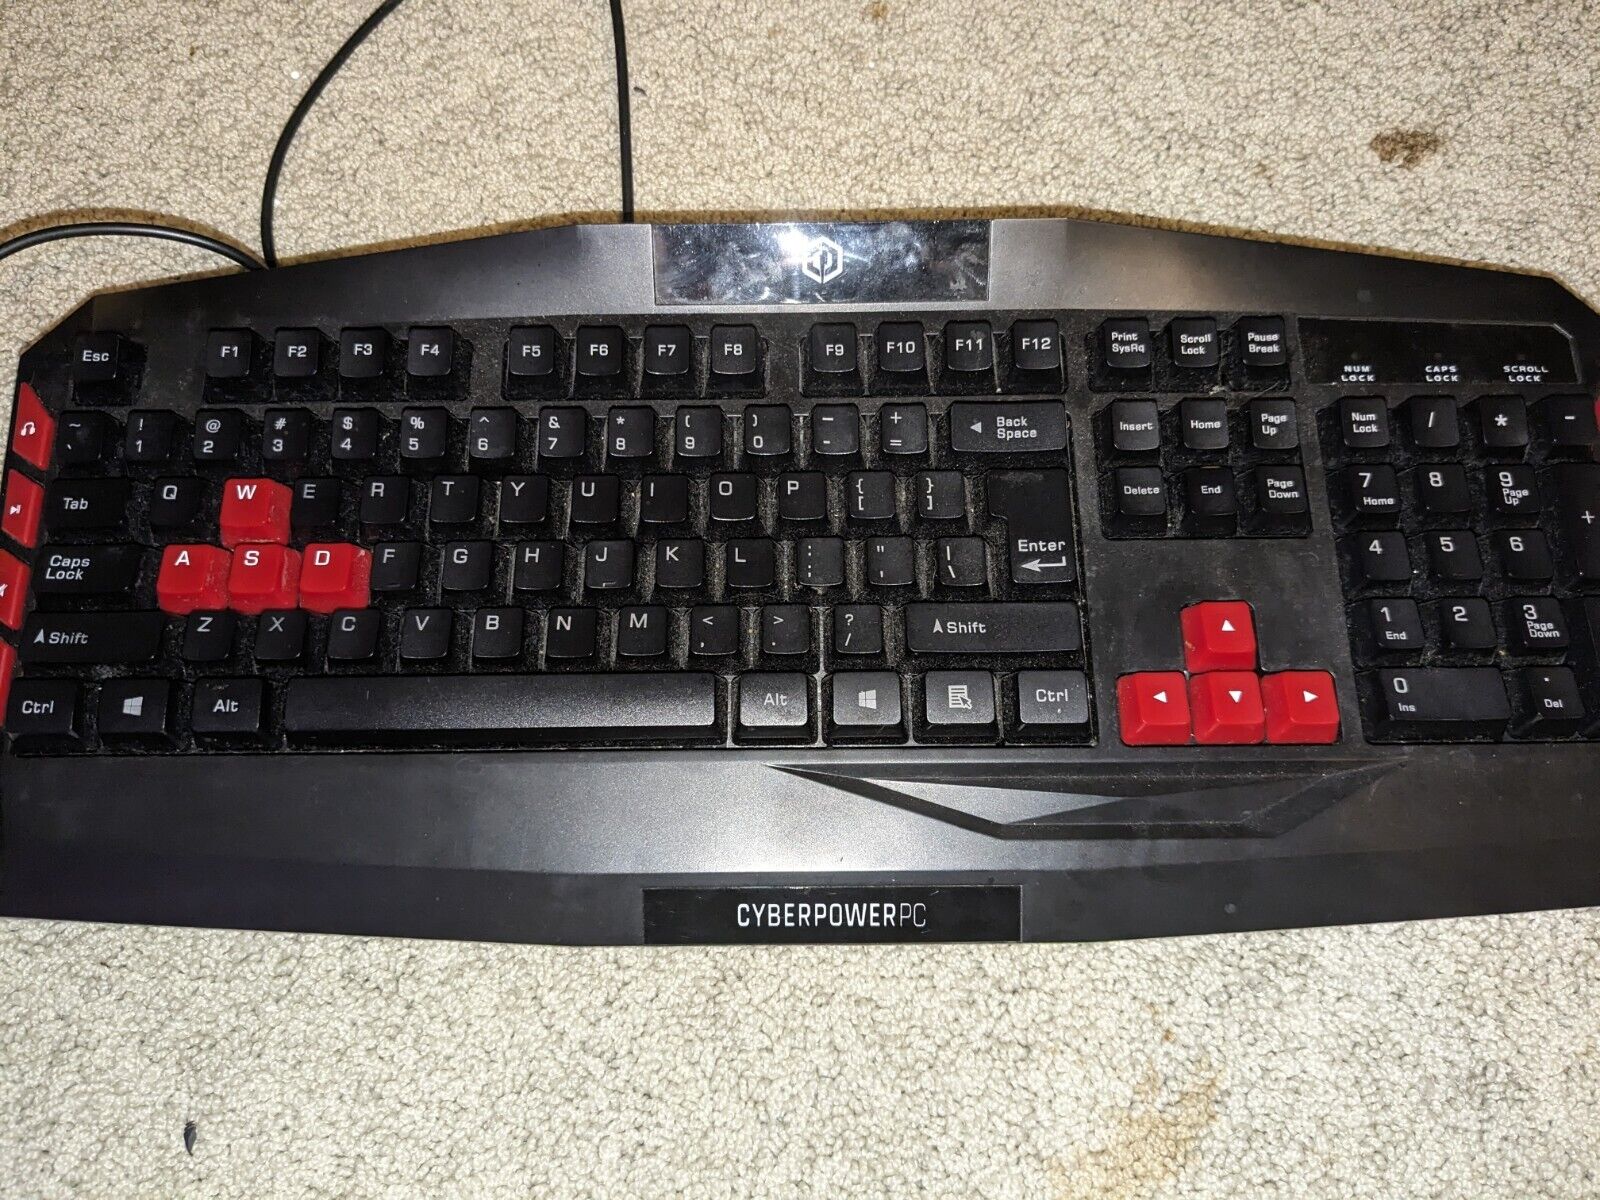 Cyberpower PC Gaming Keyboard Multimedia Gaming Wired USB Keyboard